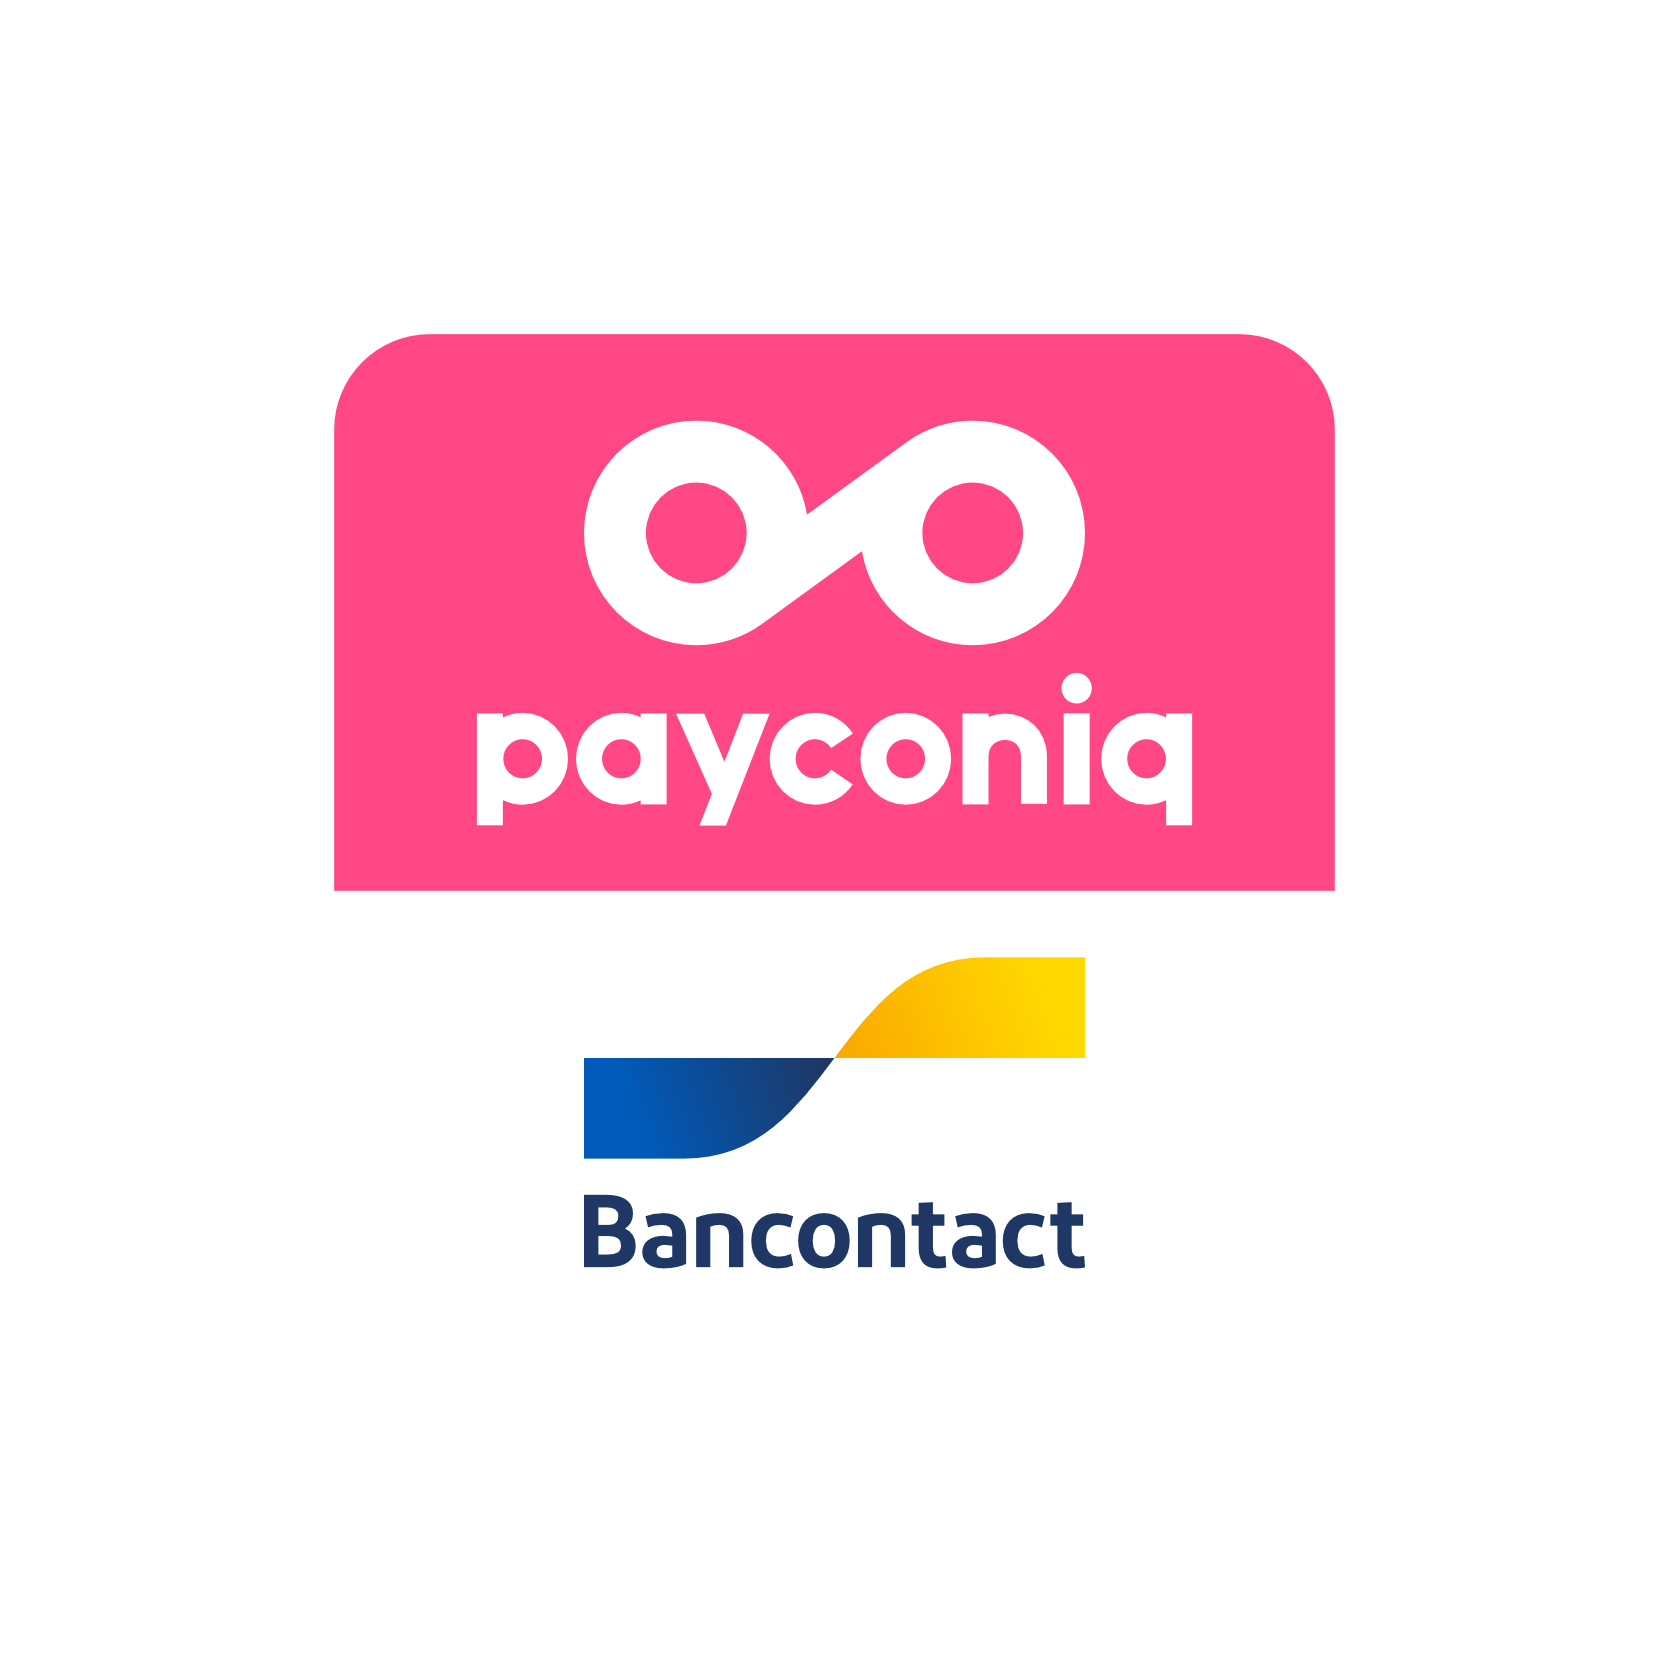 Paiement payconiq by Bancontact